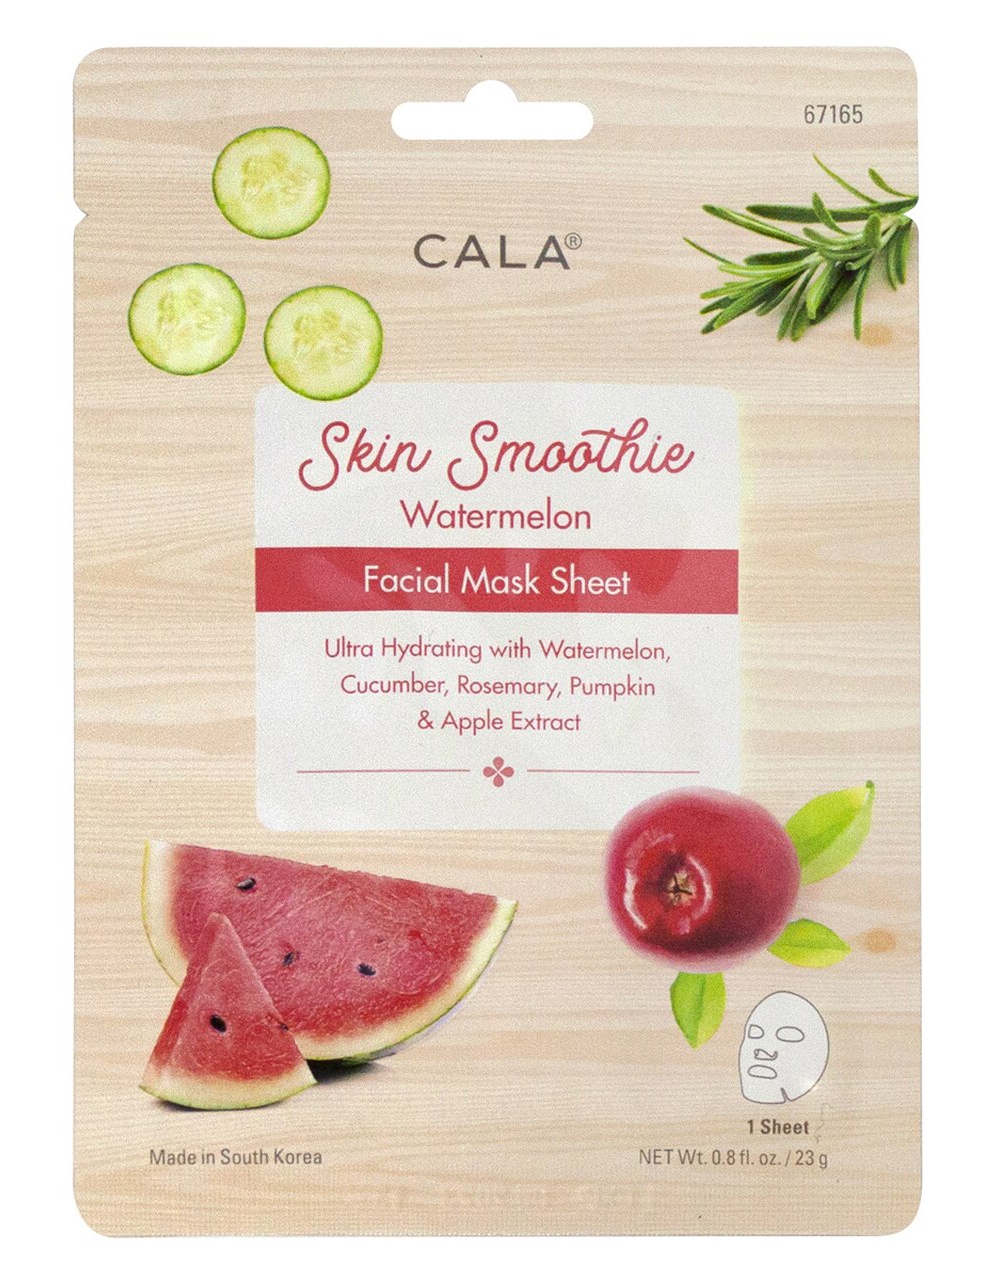 Cala Skin Smoothie Watermelon Facial Mask Sheet